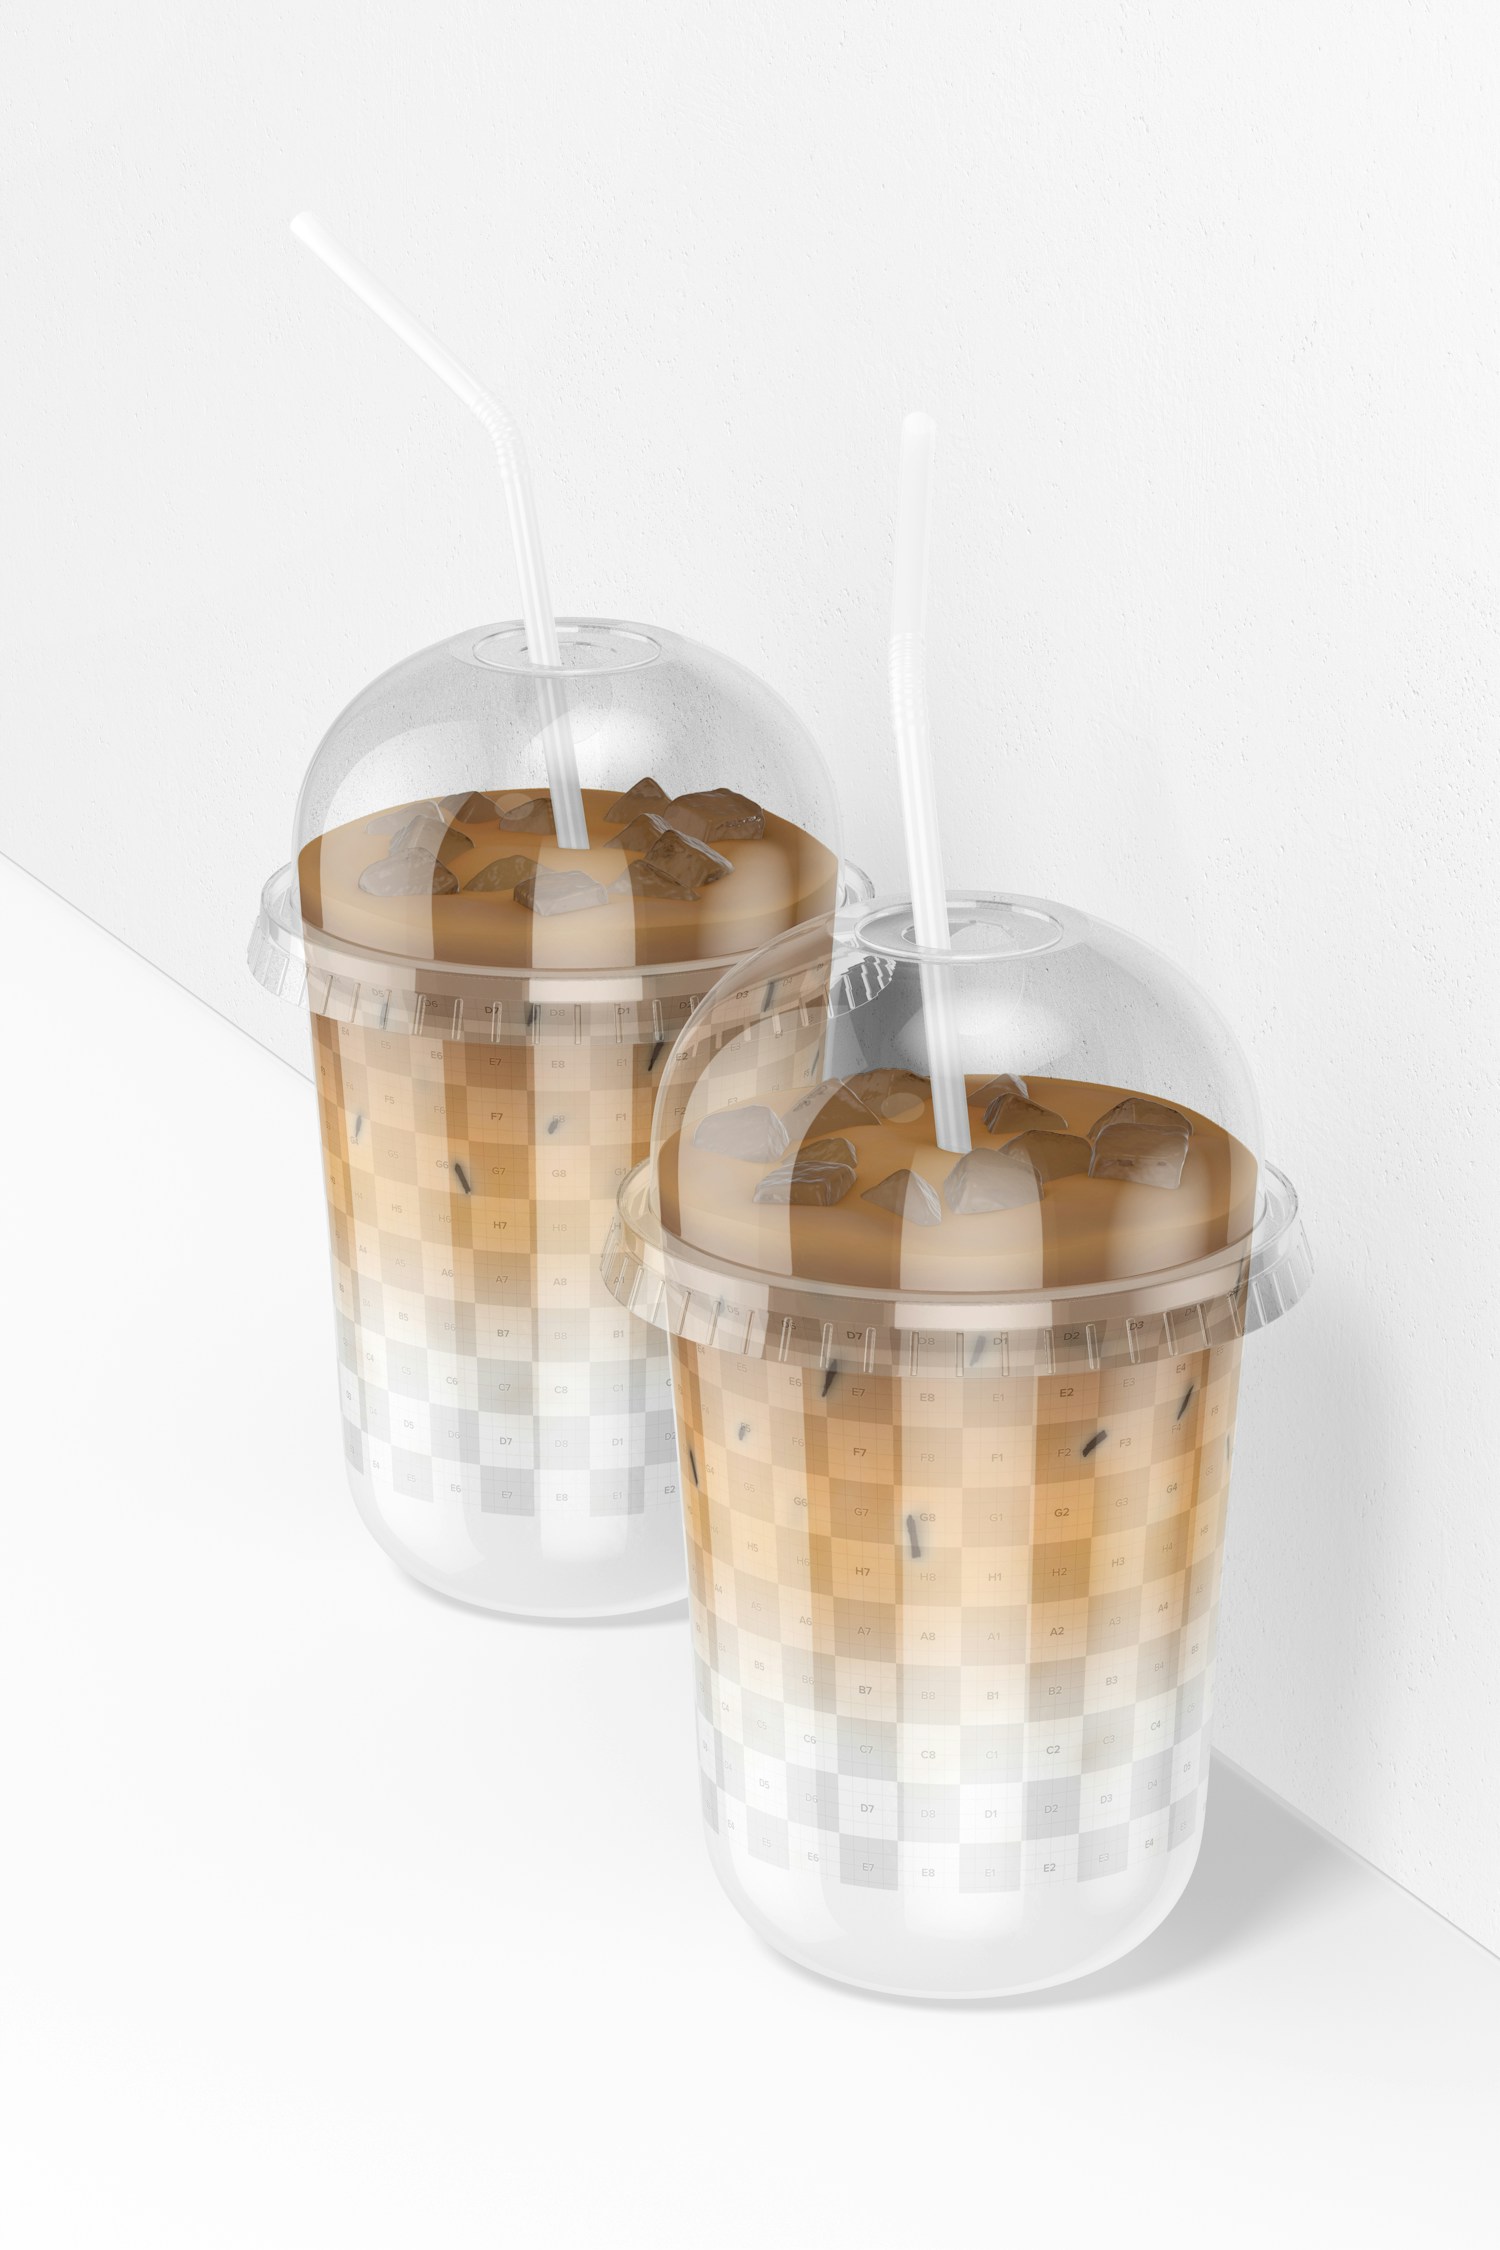 17 oz Plastic Cups Mockup, Right View